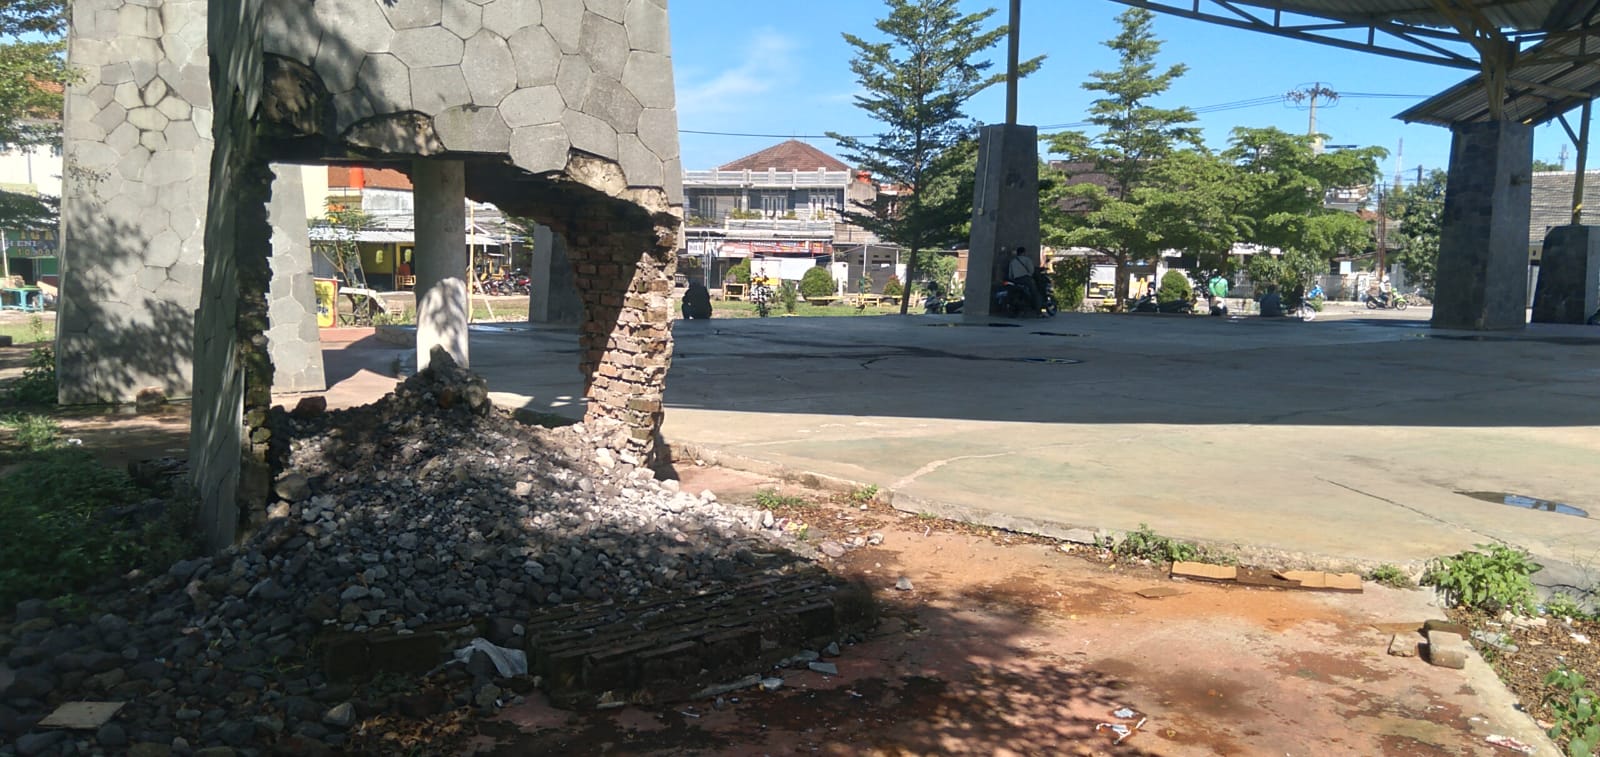 Salah satu pilar Gedung Serbaguna atau DOM Kelurahan Rancaekek Kencana, Kecamatan Rancaekek, Kabupaten Bandung yang kondisinya rusak berat. (Yanuar/Jabar Ekspres)